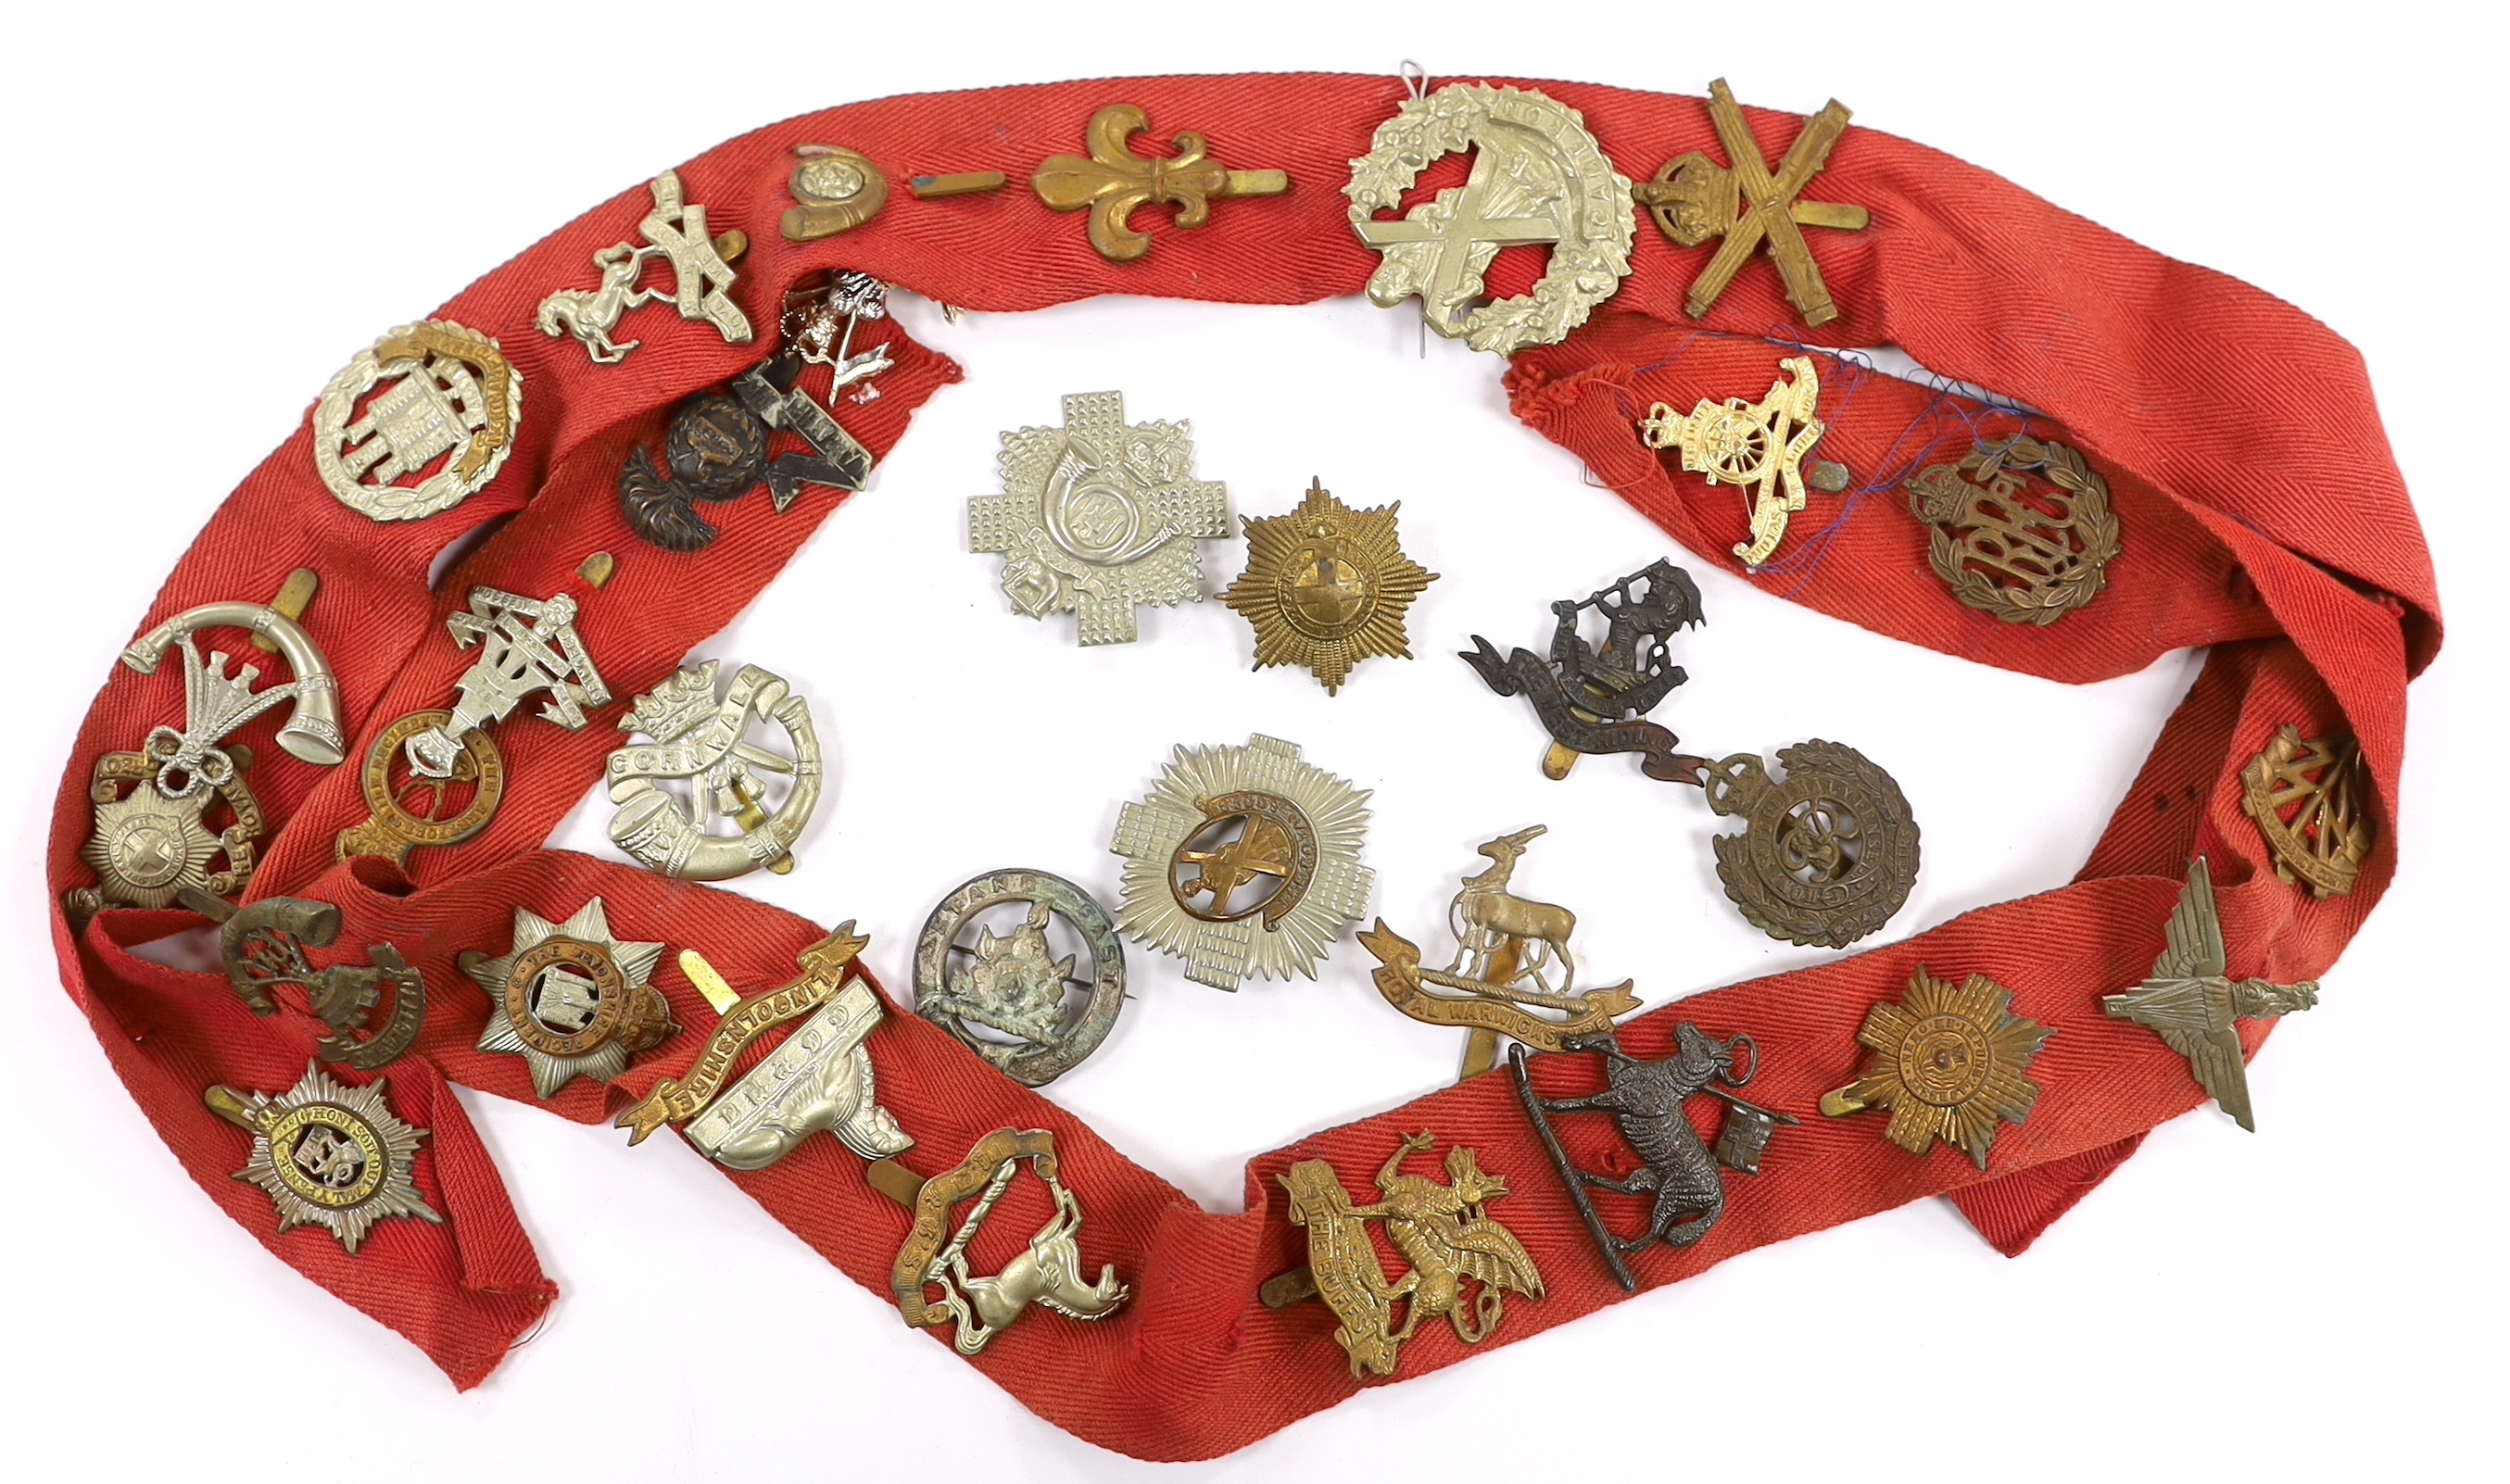 Thirty-two military cap badges, including; The Devonshire Reg., The Buffs, RFC, Royal Artillery, The Royal Sussex Reg. Royal Warwickshire Reg., Cornwall, etc.